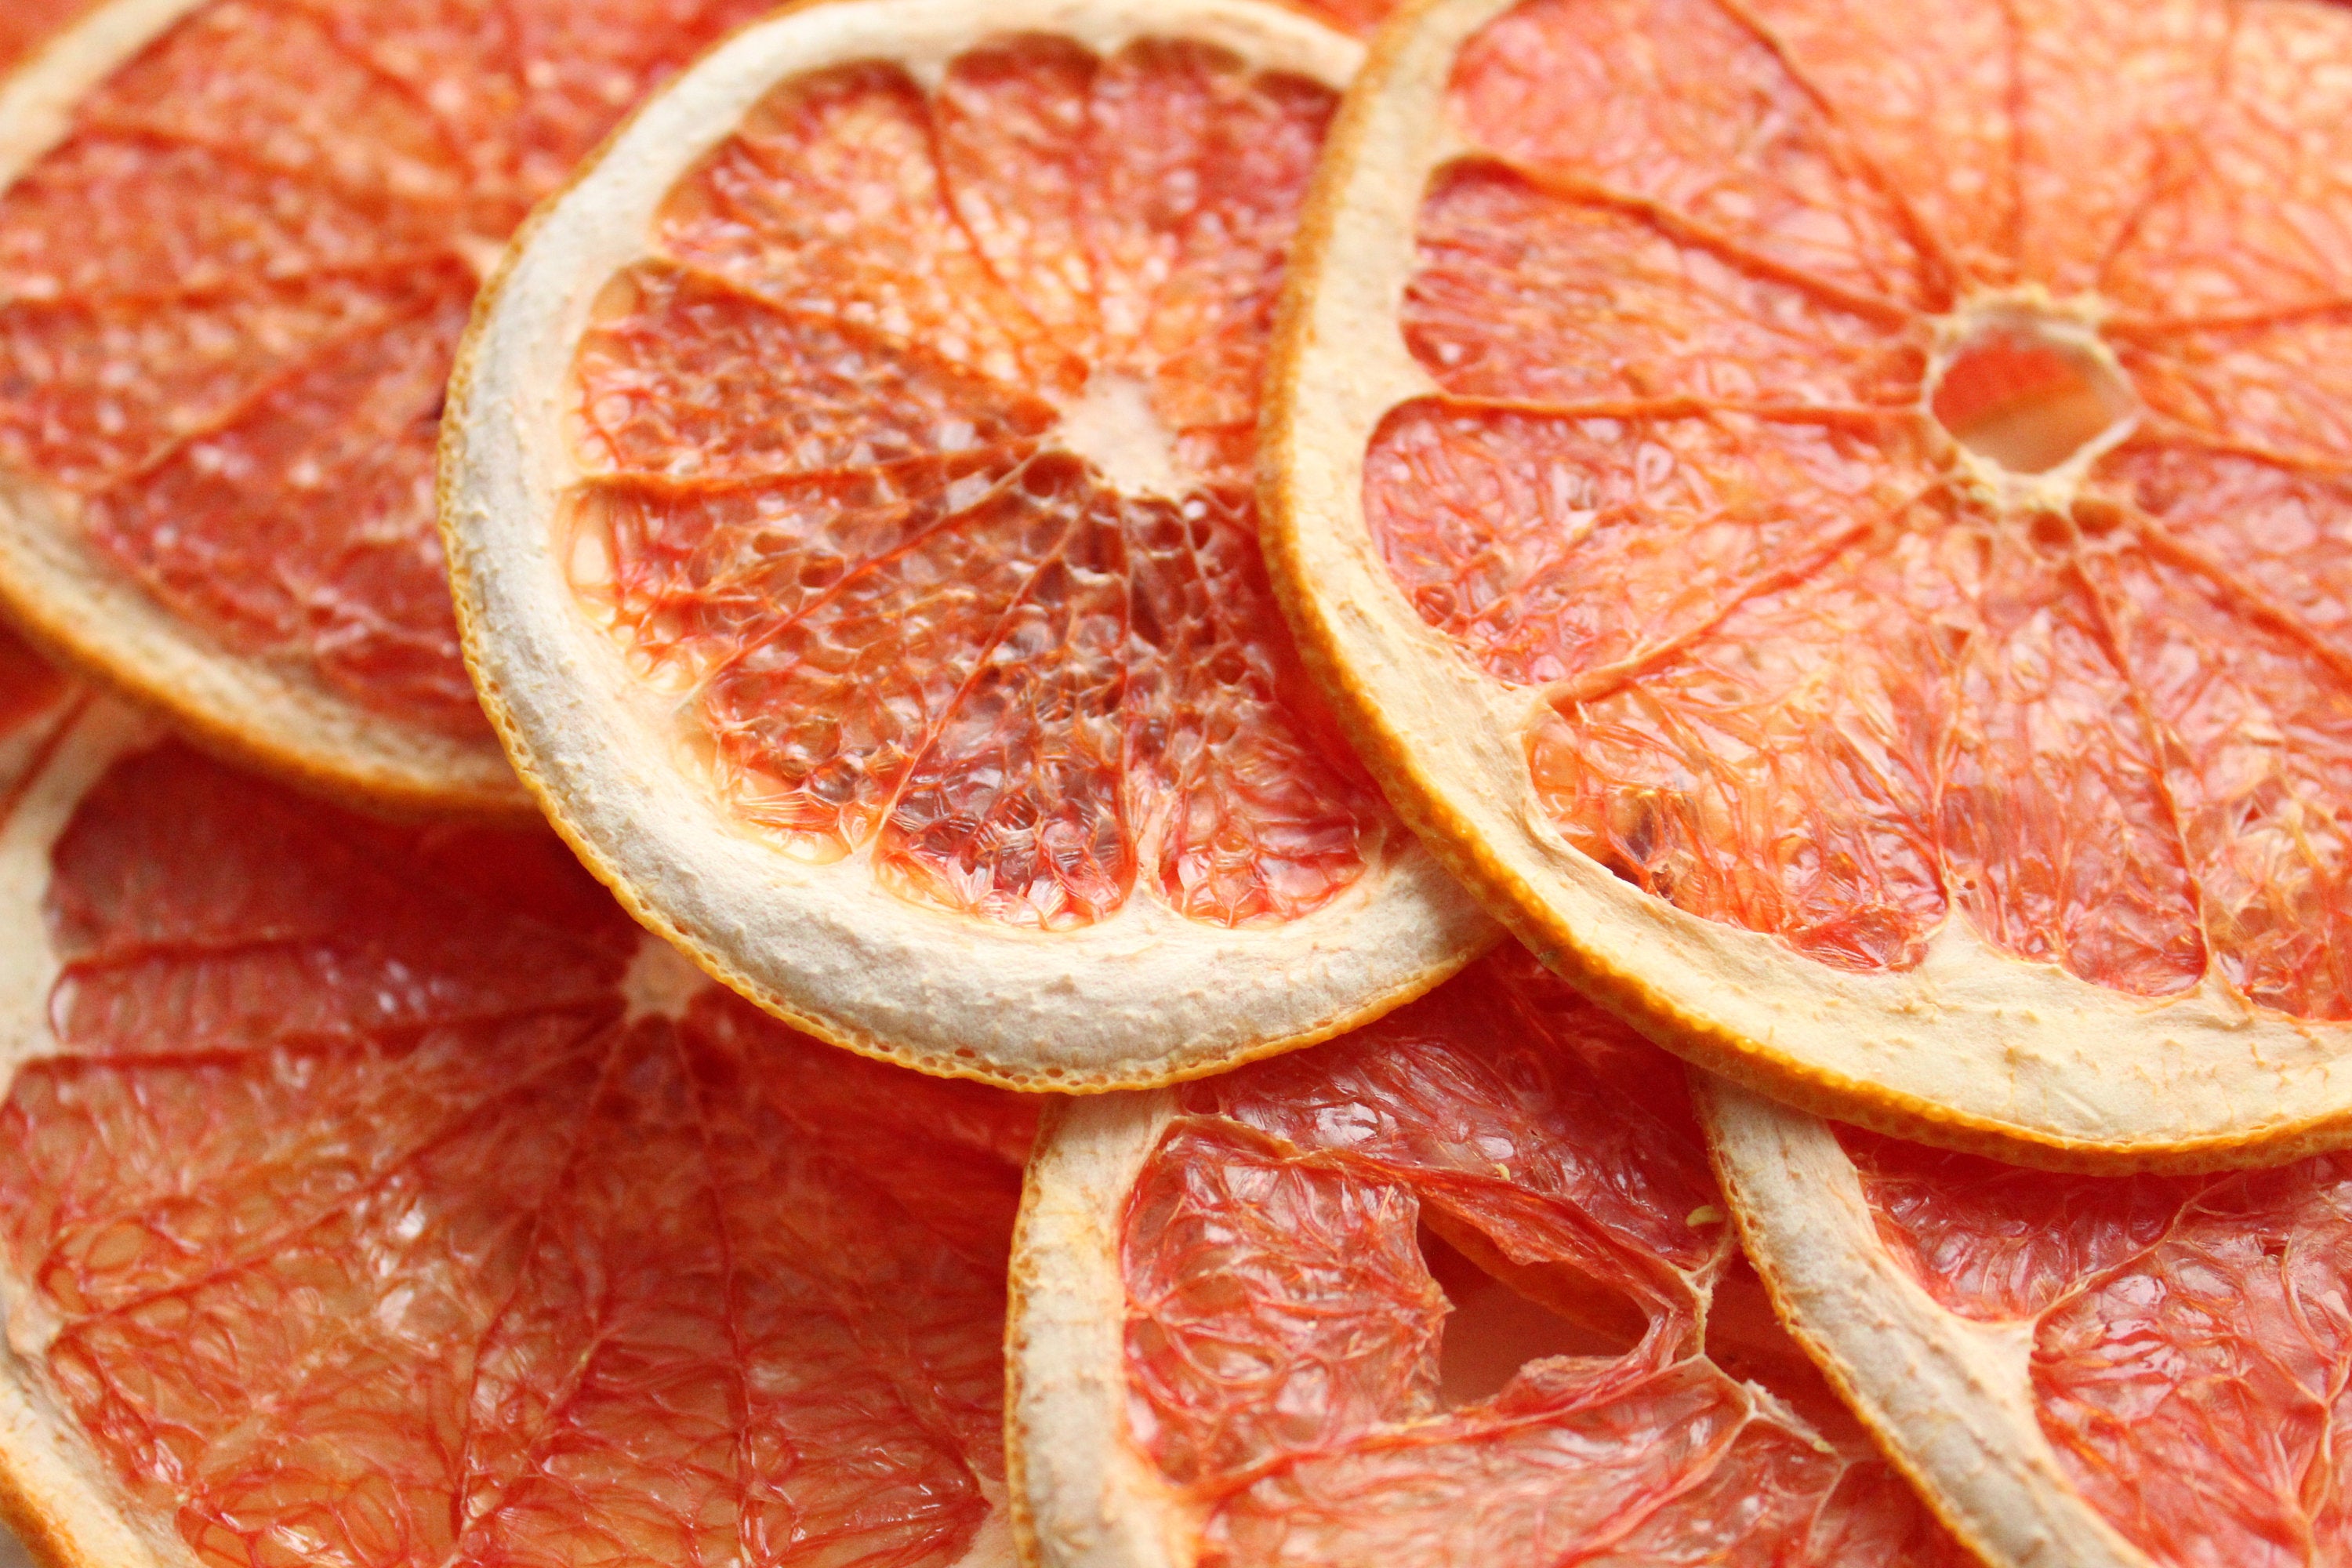 50 Dried Organic Homemade Fruits, 10 pcs of Each Grapefruit , Lime, Lemon, Tangerine (Mandarin) and Orange Slices, Fragrance and Colors Free